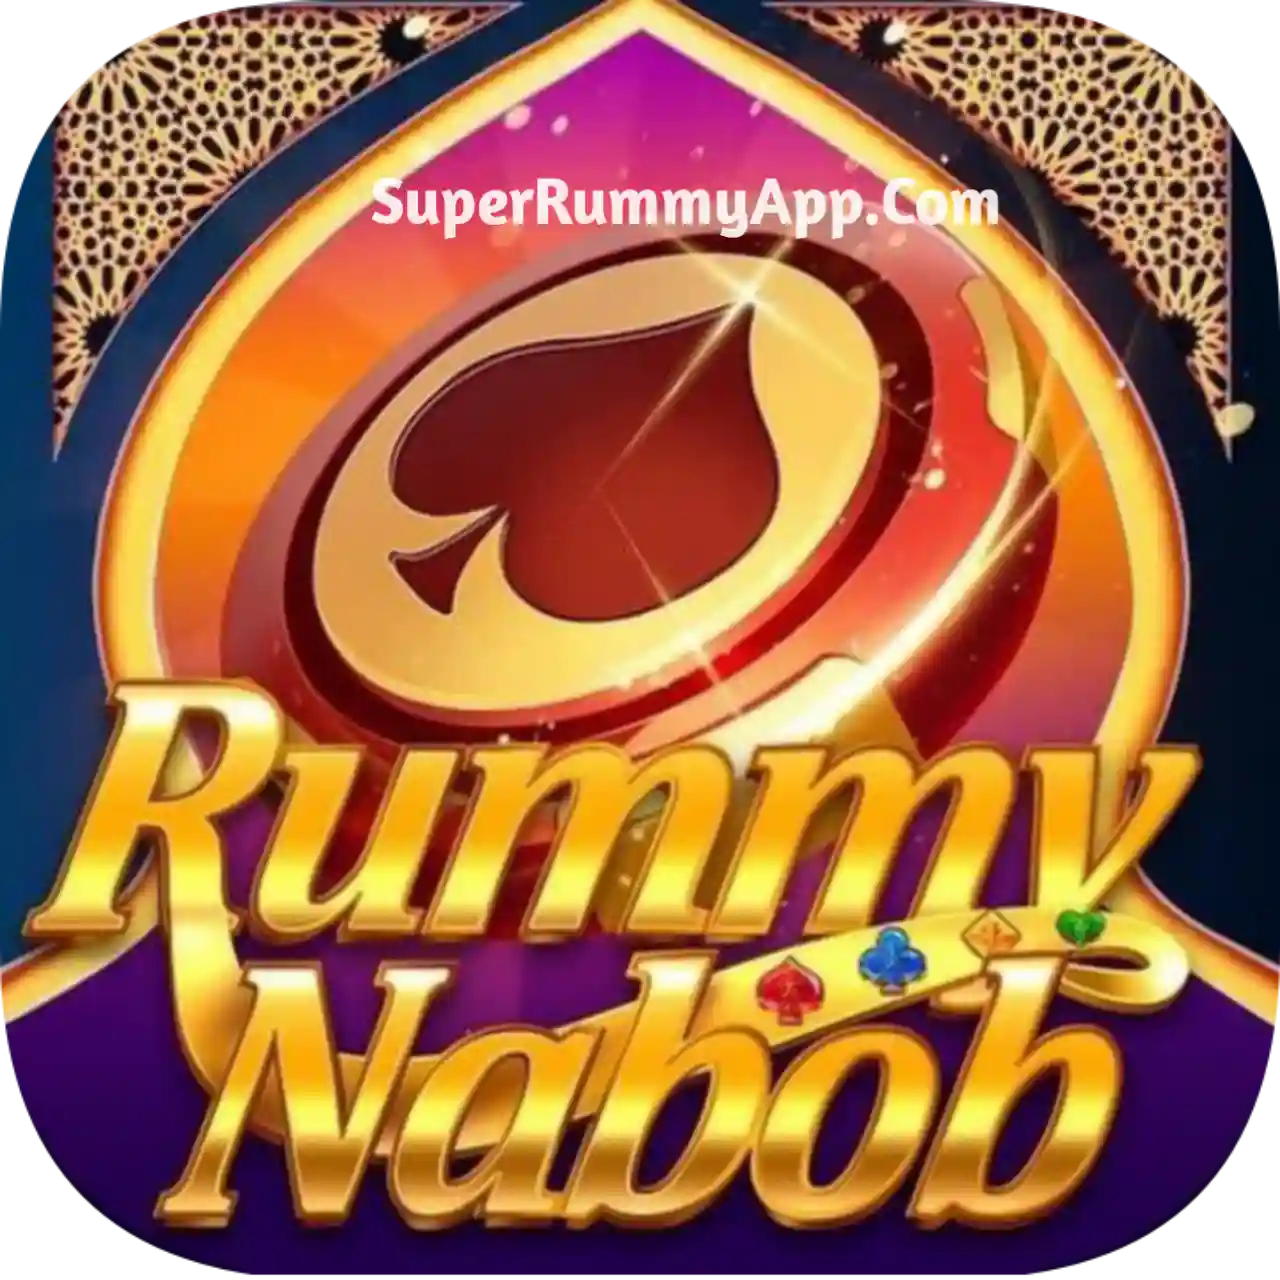 Rummy Nabob App Download All Rummy Apps List - Super Rummy App